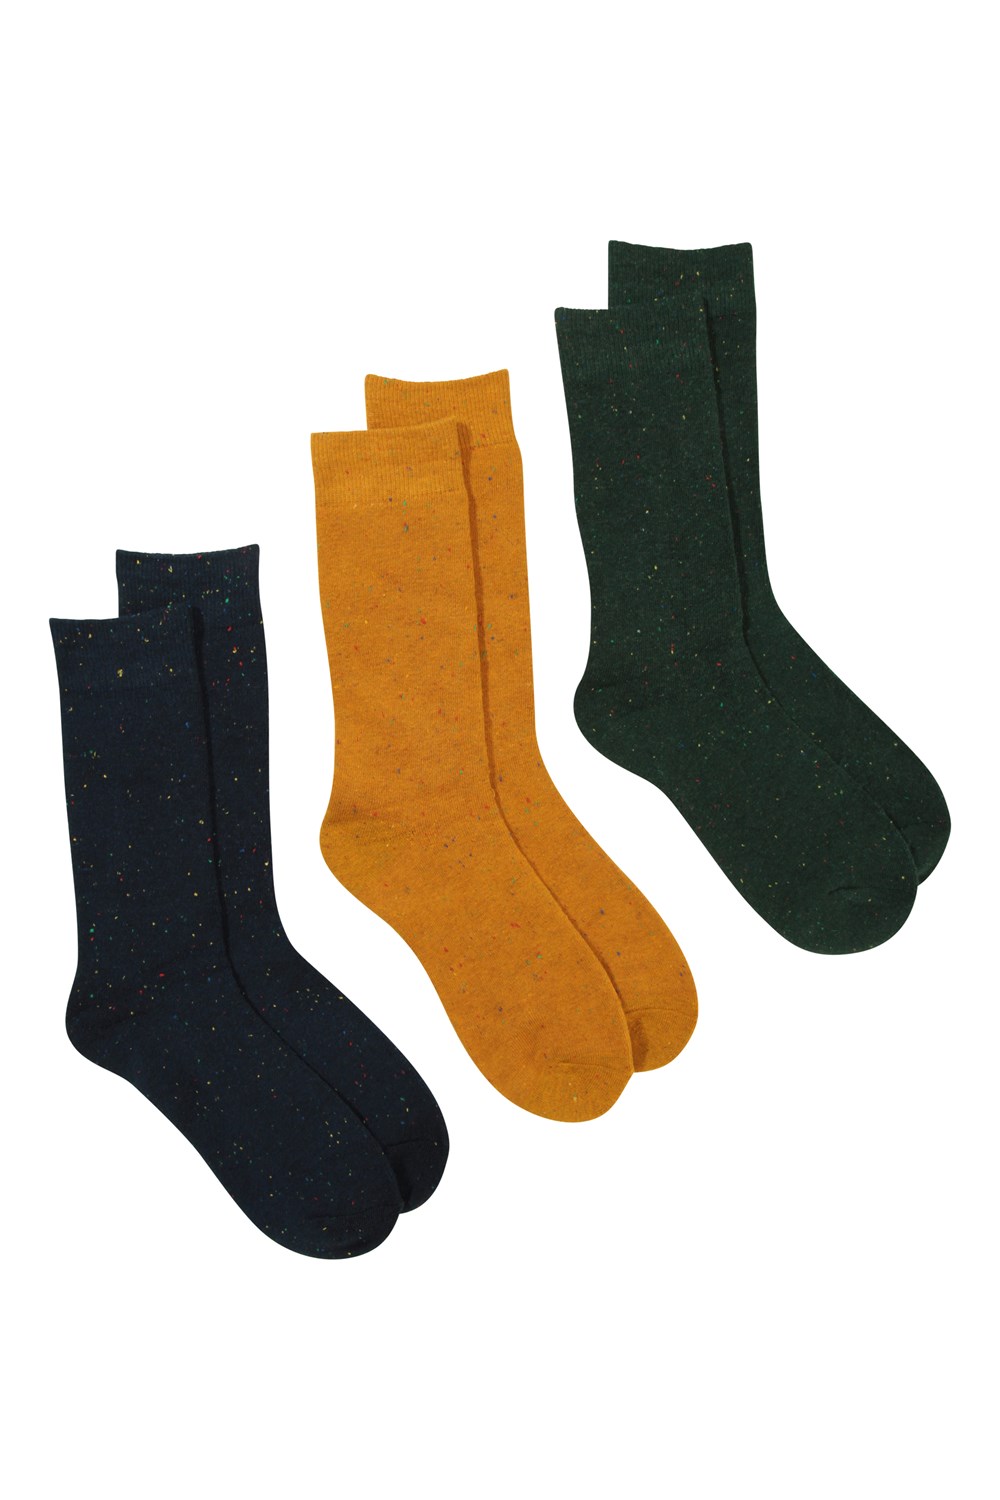 Mountain Warehouse Mens Fleck Socks - Lightweight, Warm - for Winter | eBay